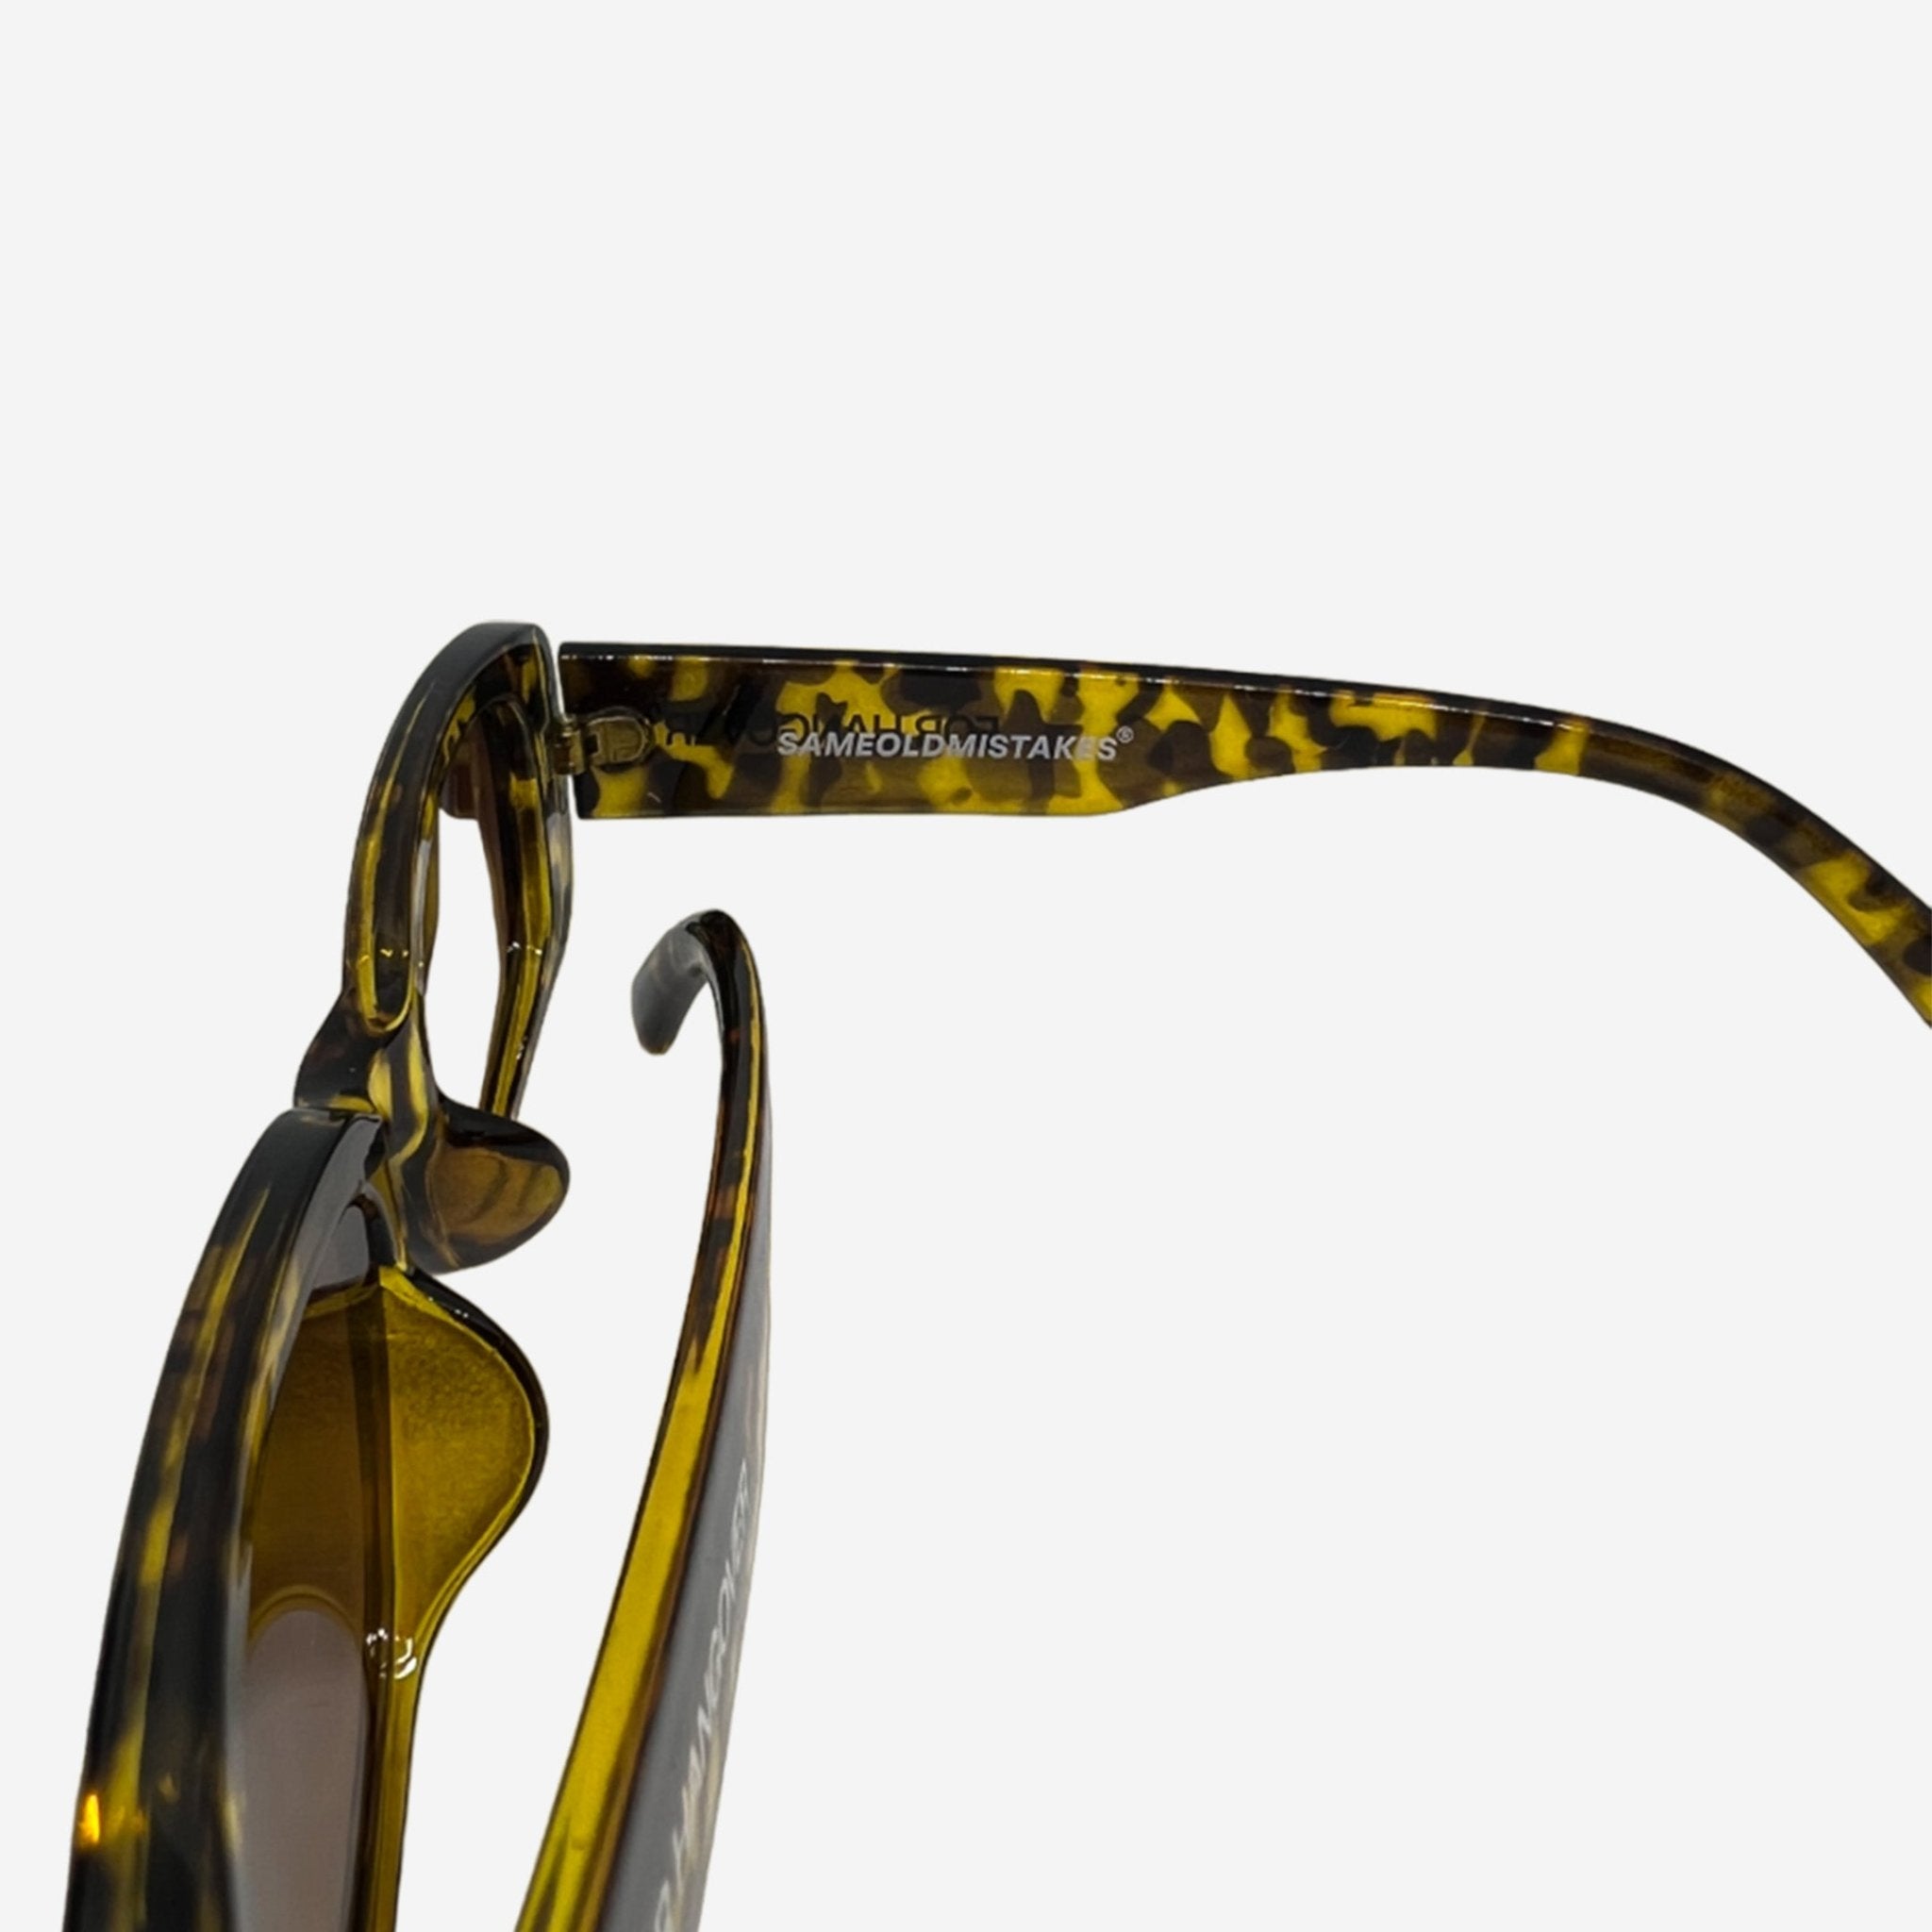 For hangover sunglasses turtle - sameoldmistakes